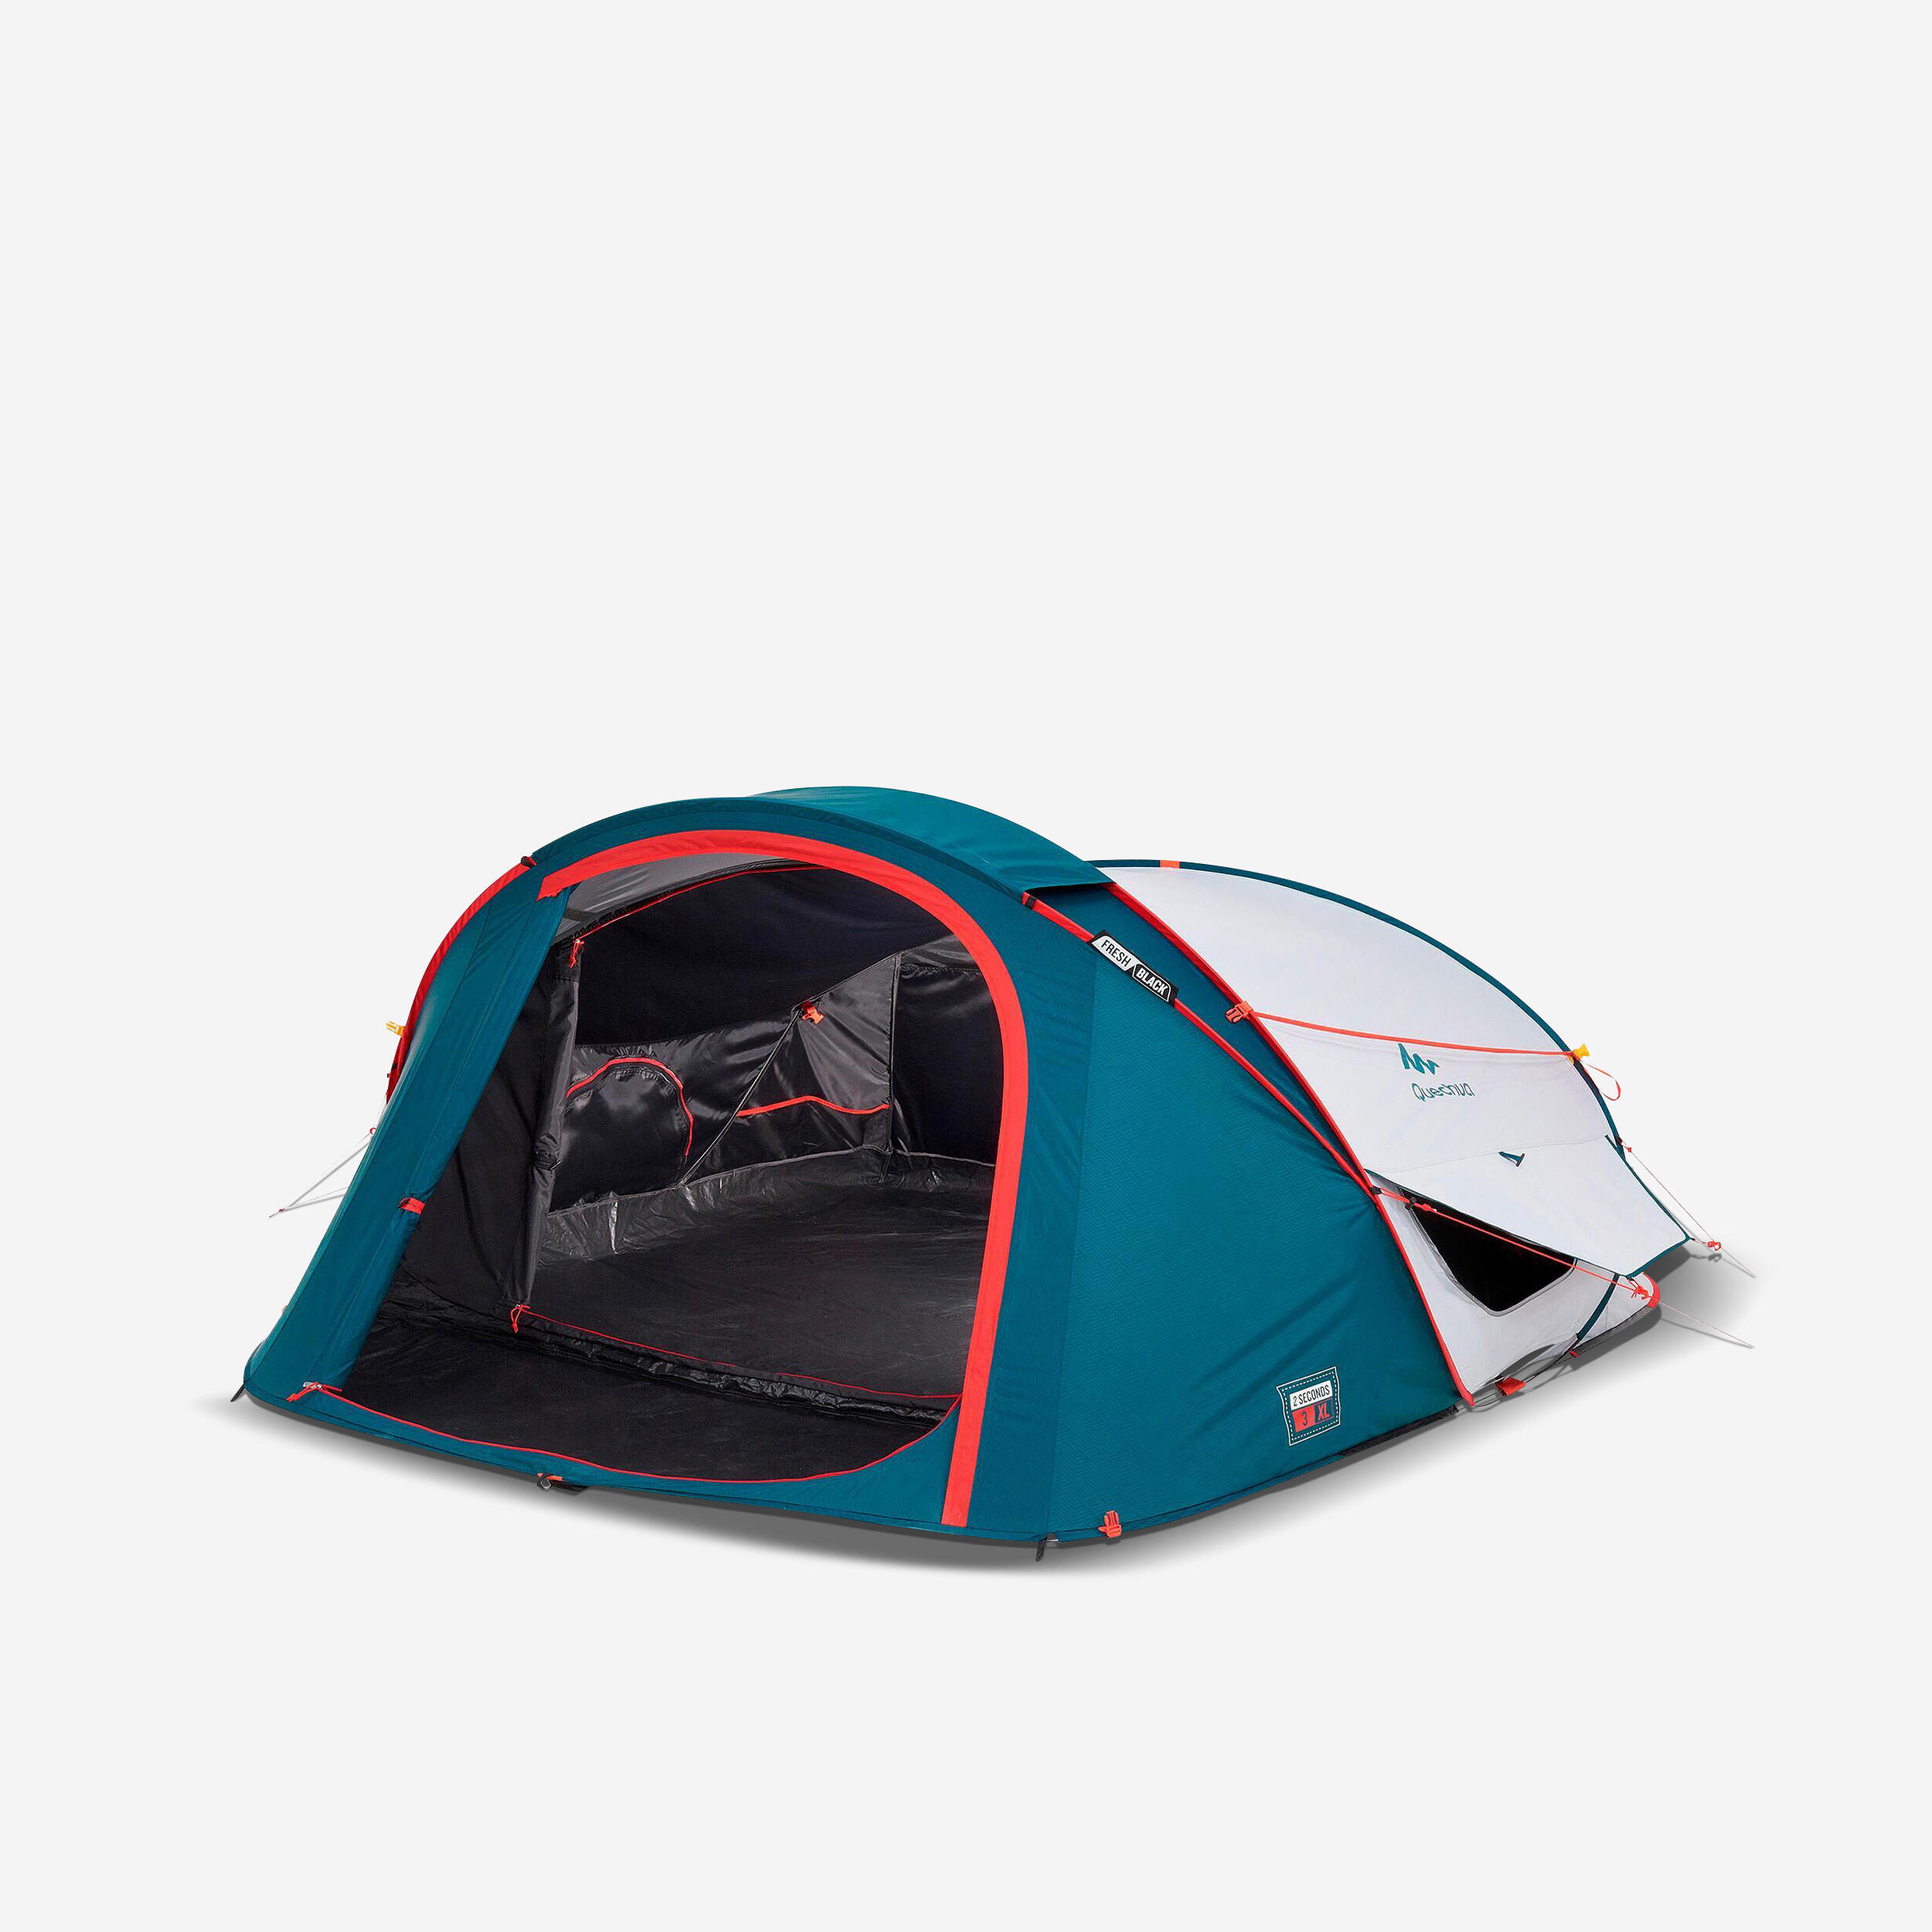 Camping tent - 2 SECONDS XL - 3-person - Fresh & Black 1/16